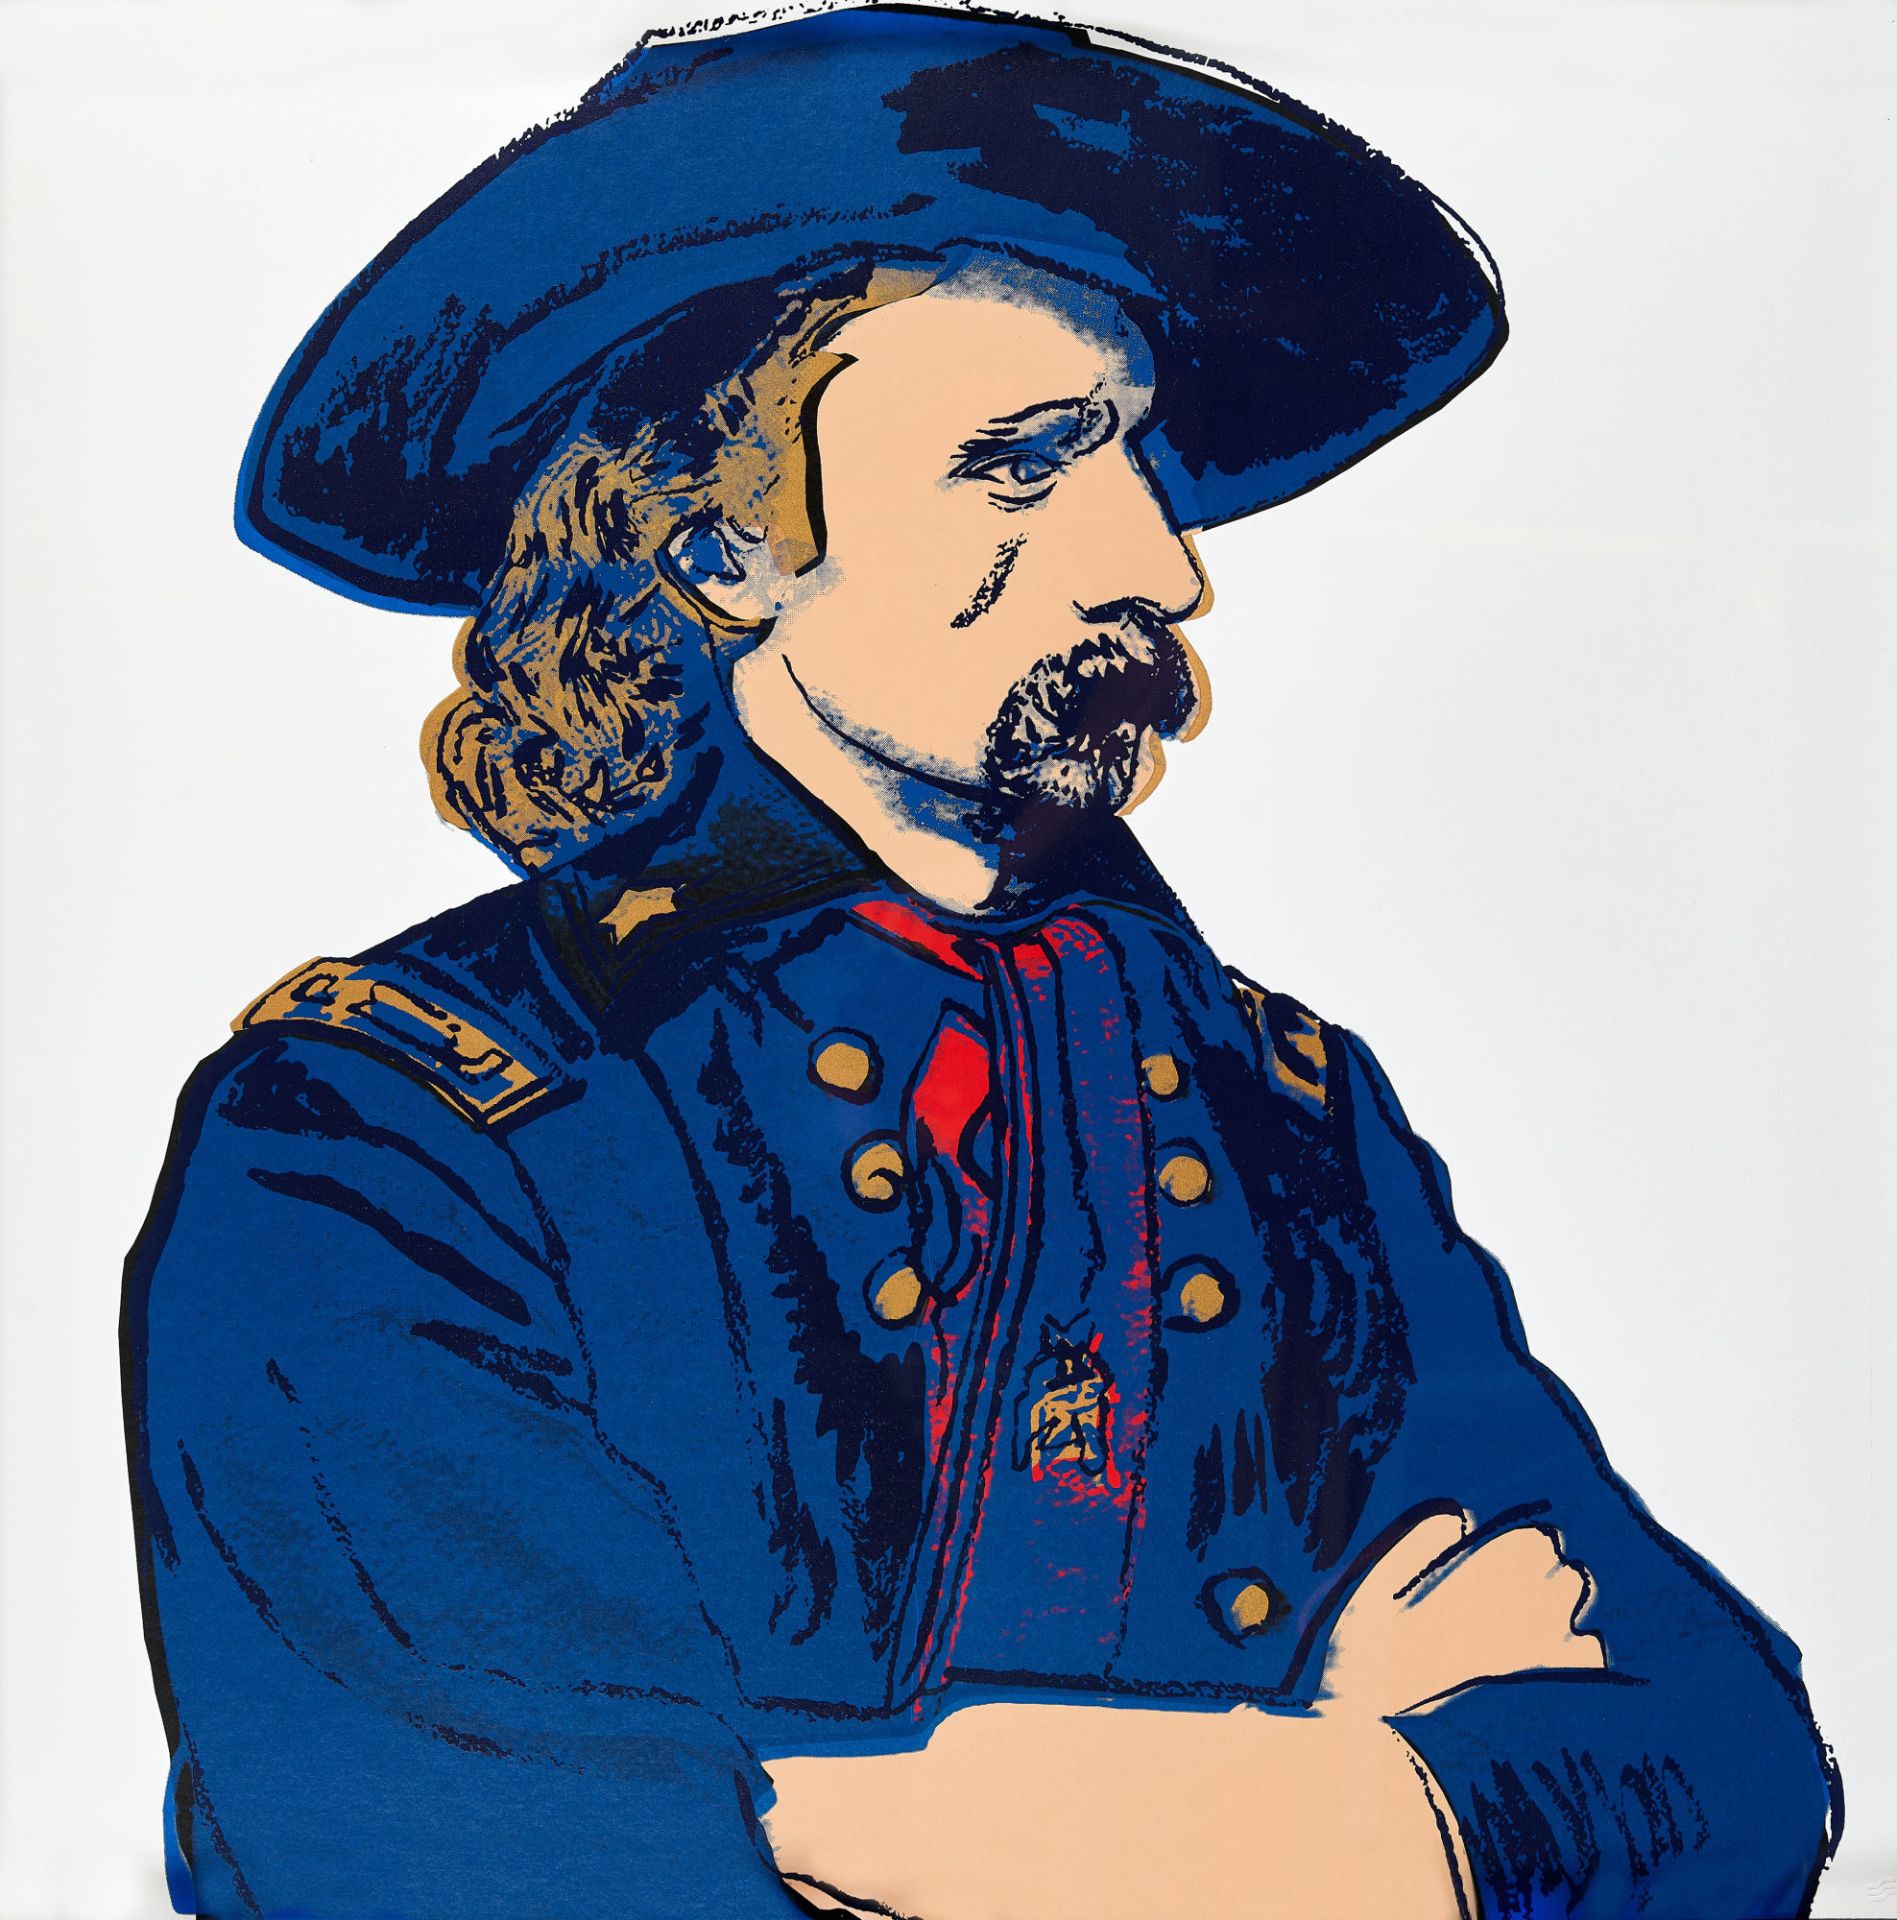 WARHOL, ANDY: "General Custer".